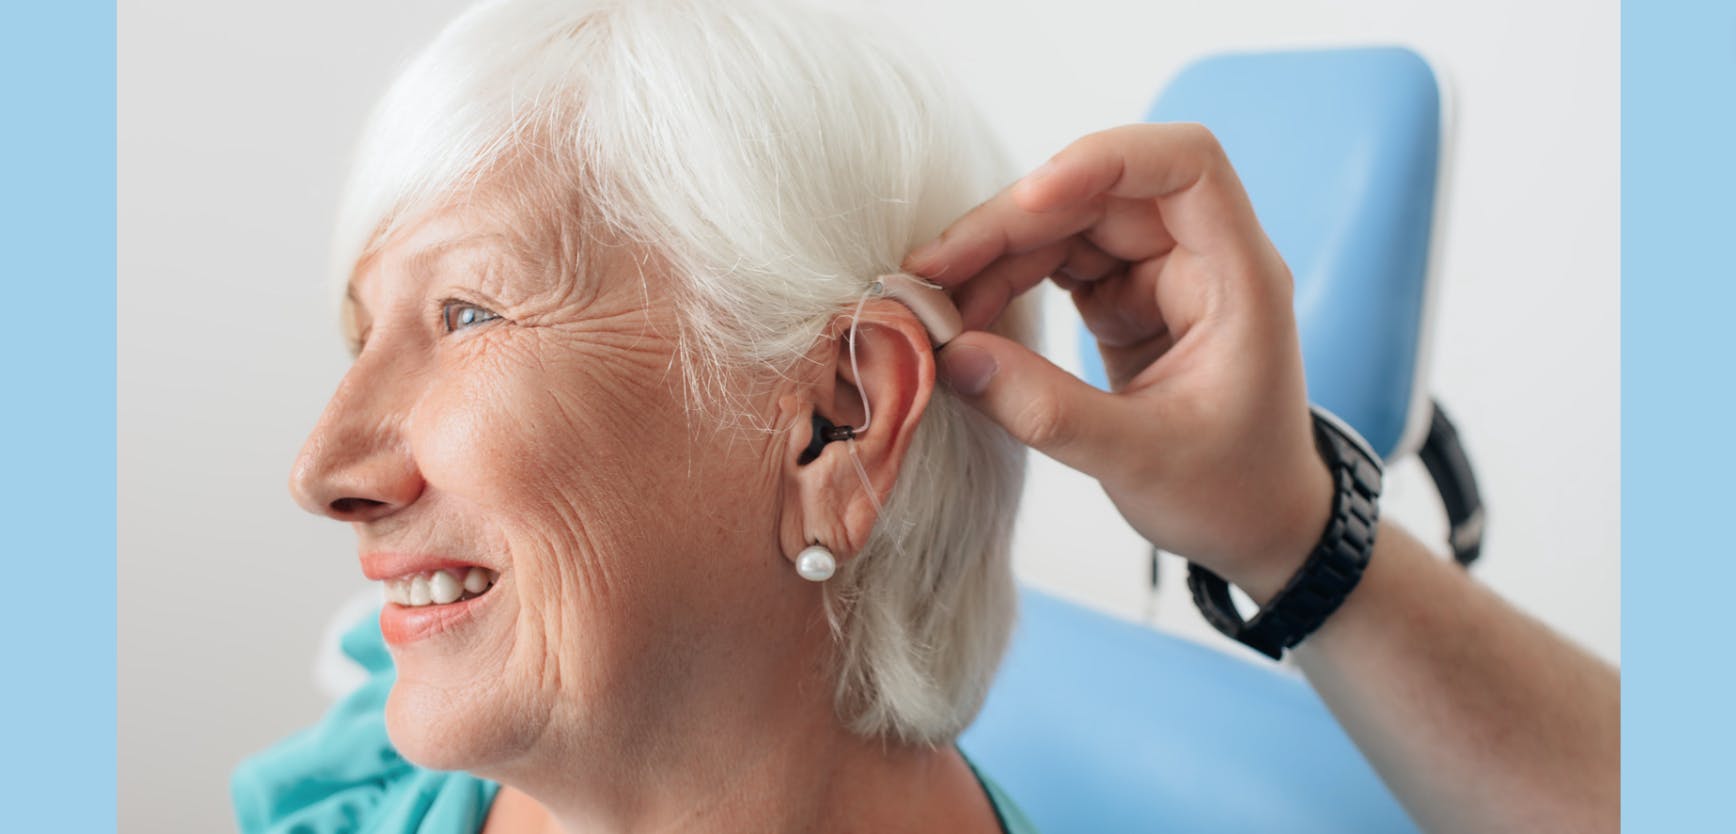 Orthopedics, hearing aids, maternal aids background image